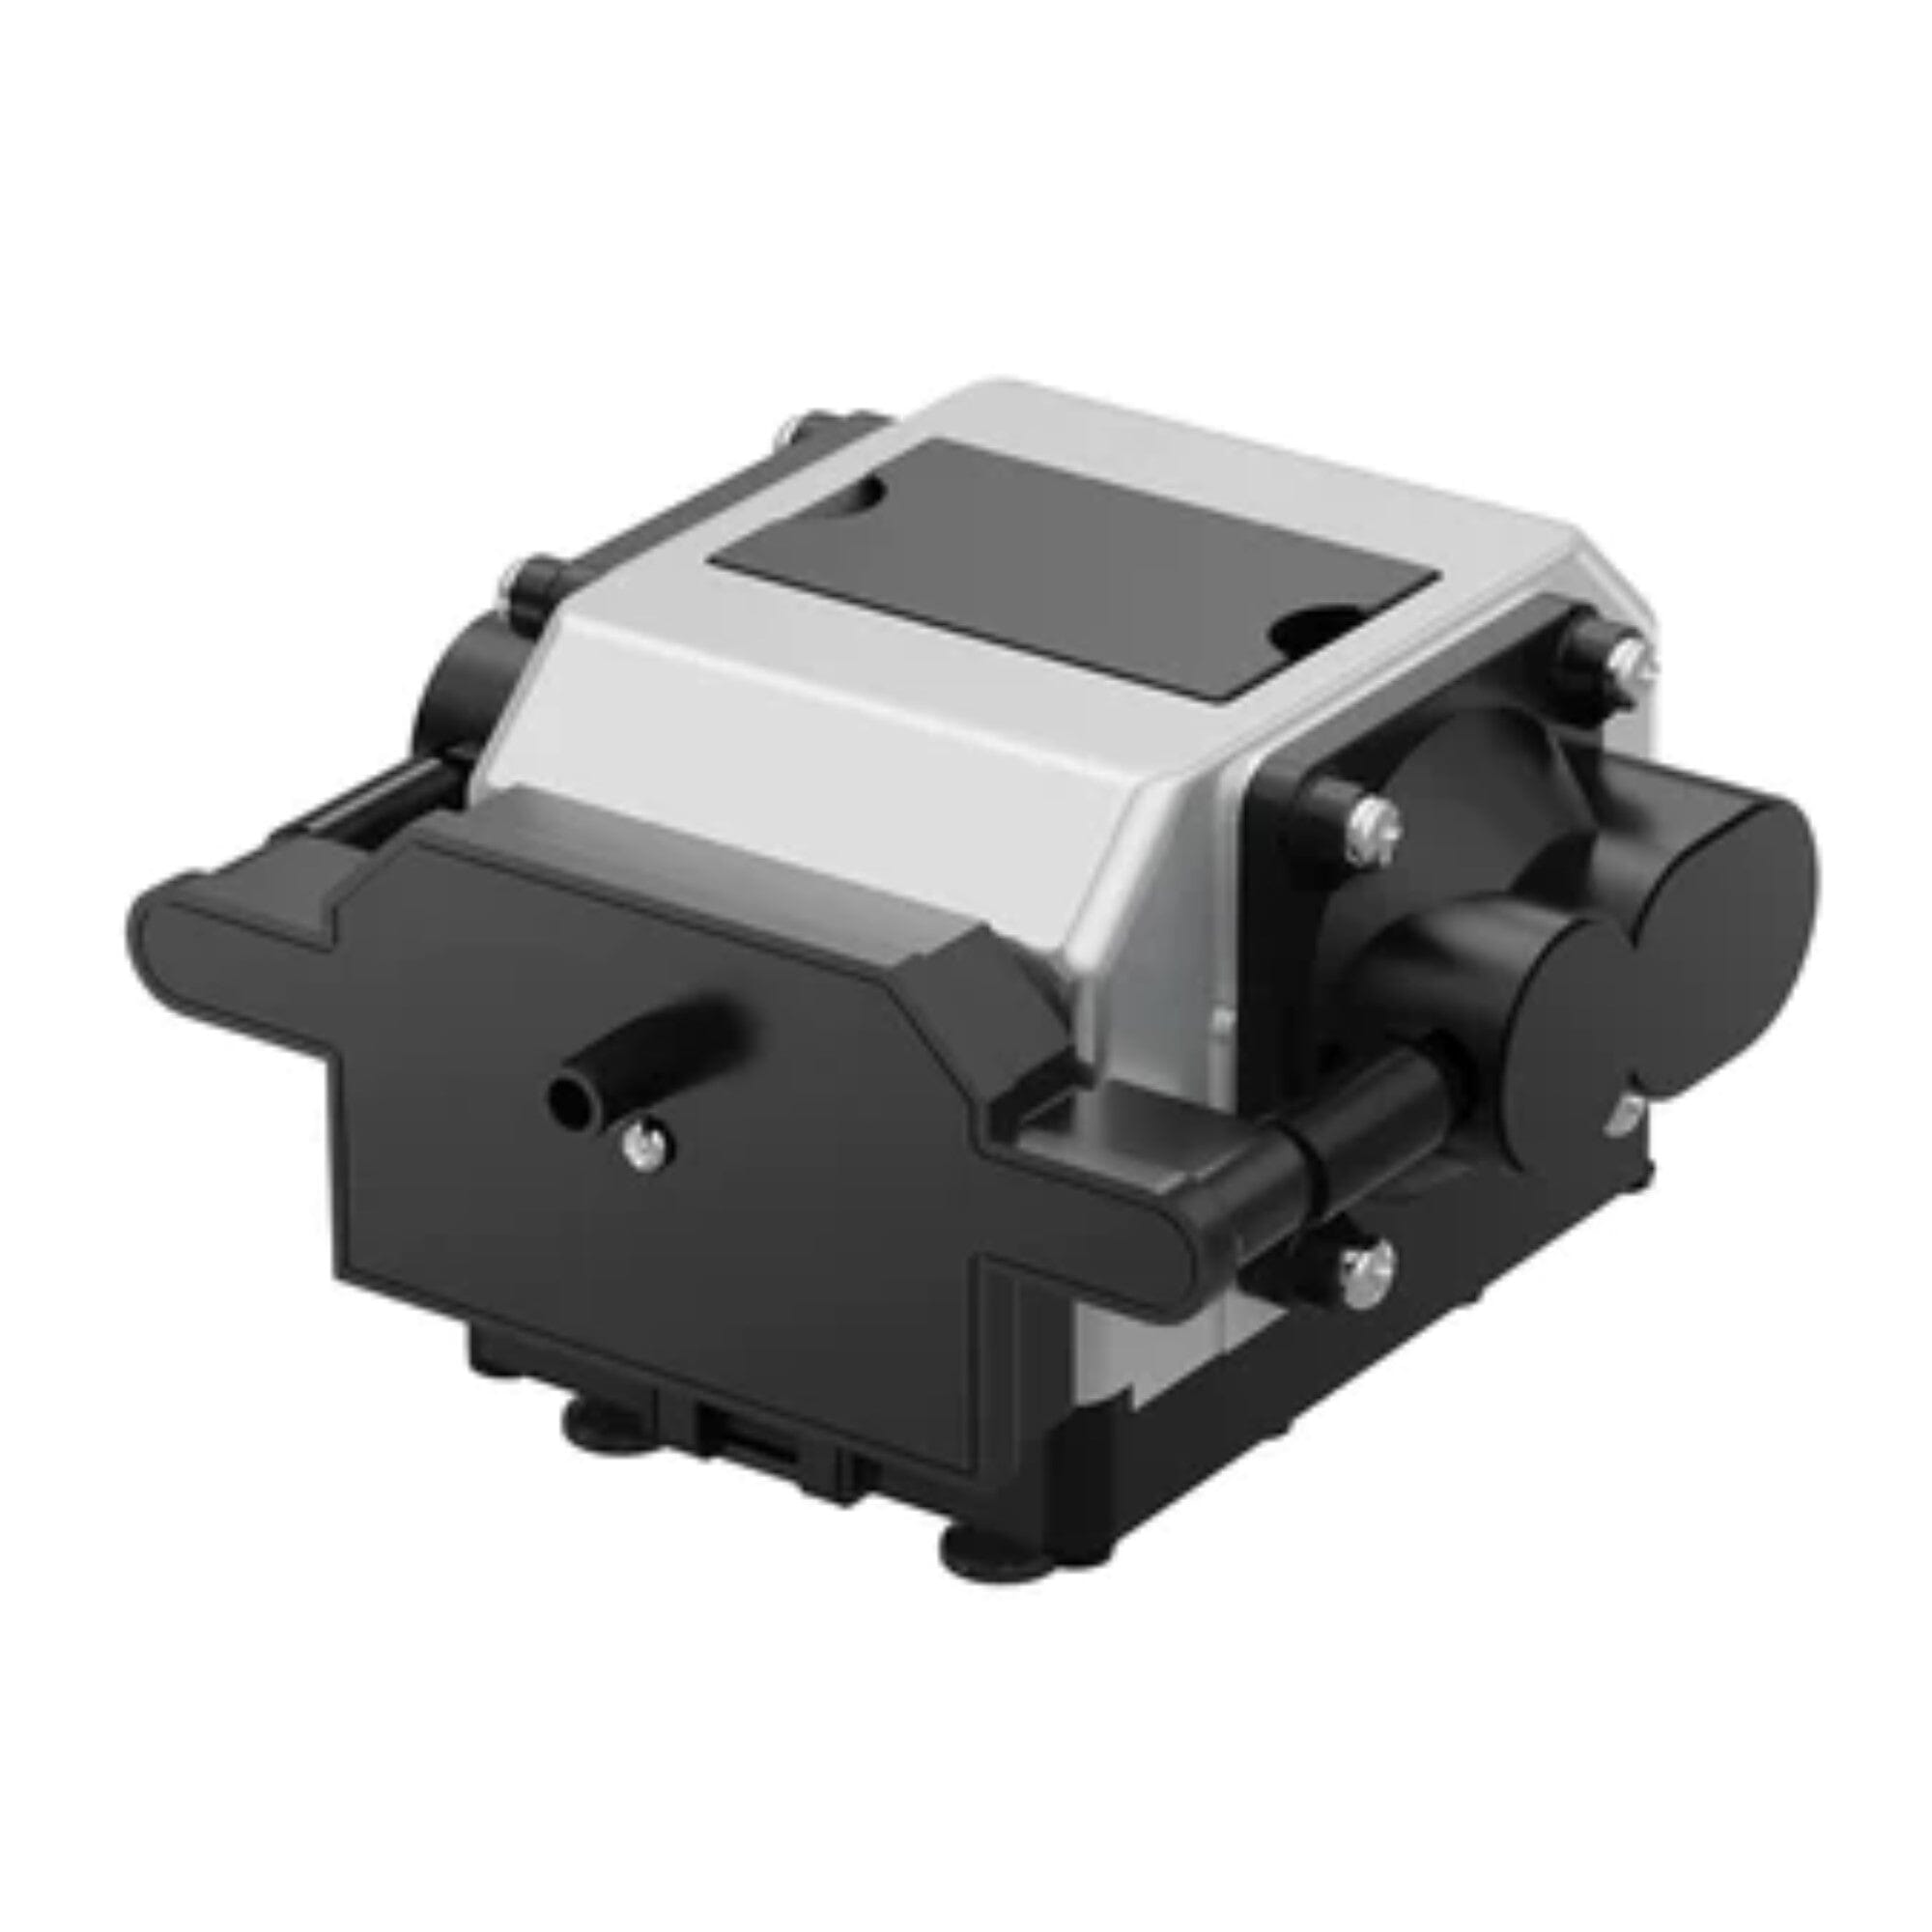 xTool D1/D1 Pro Air Assist Set  3D Printing Supplies, 3D Printers and  Laser Engravers